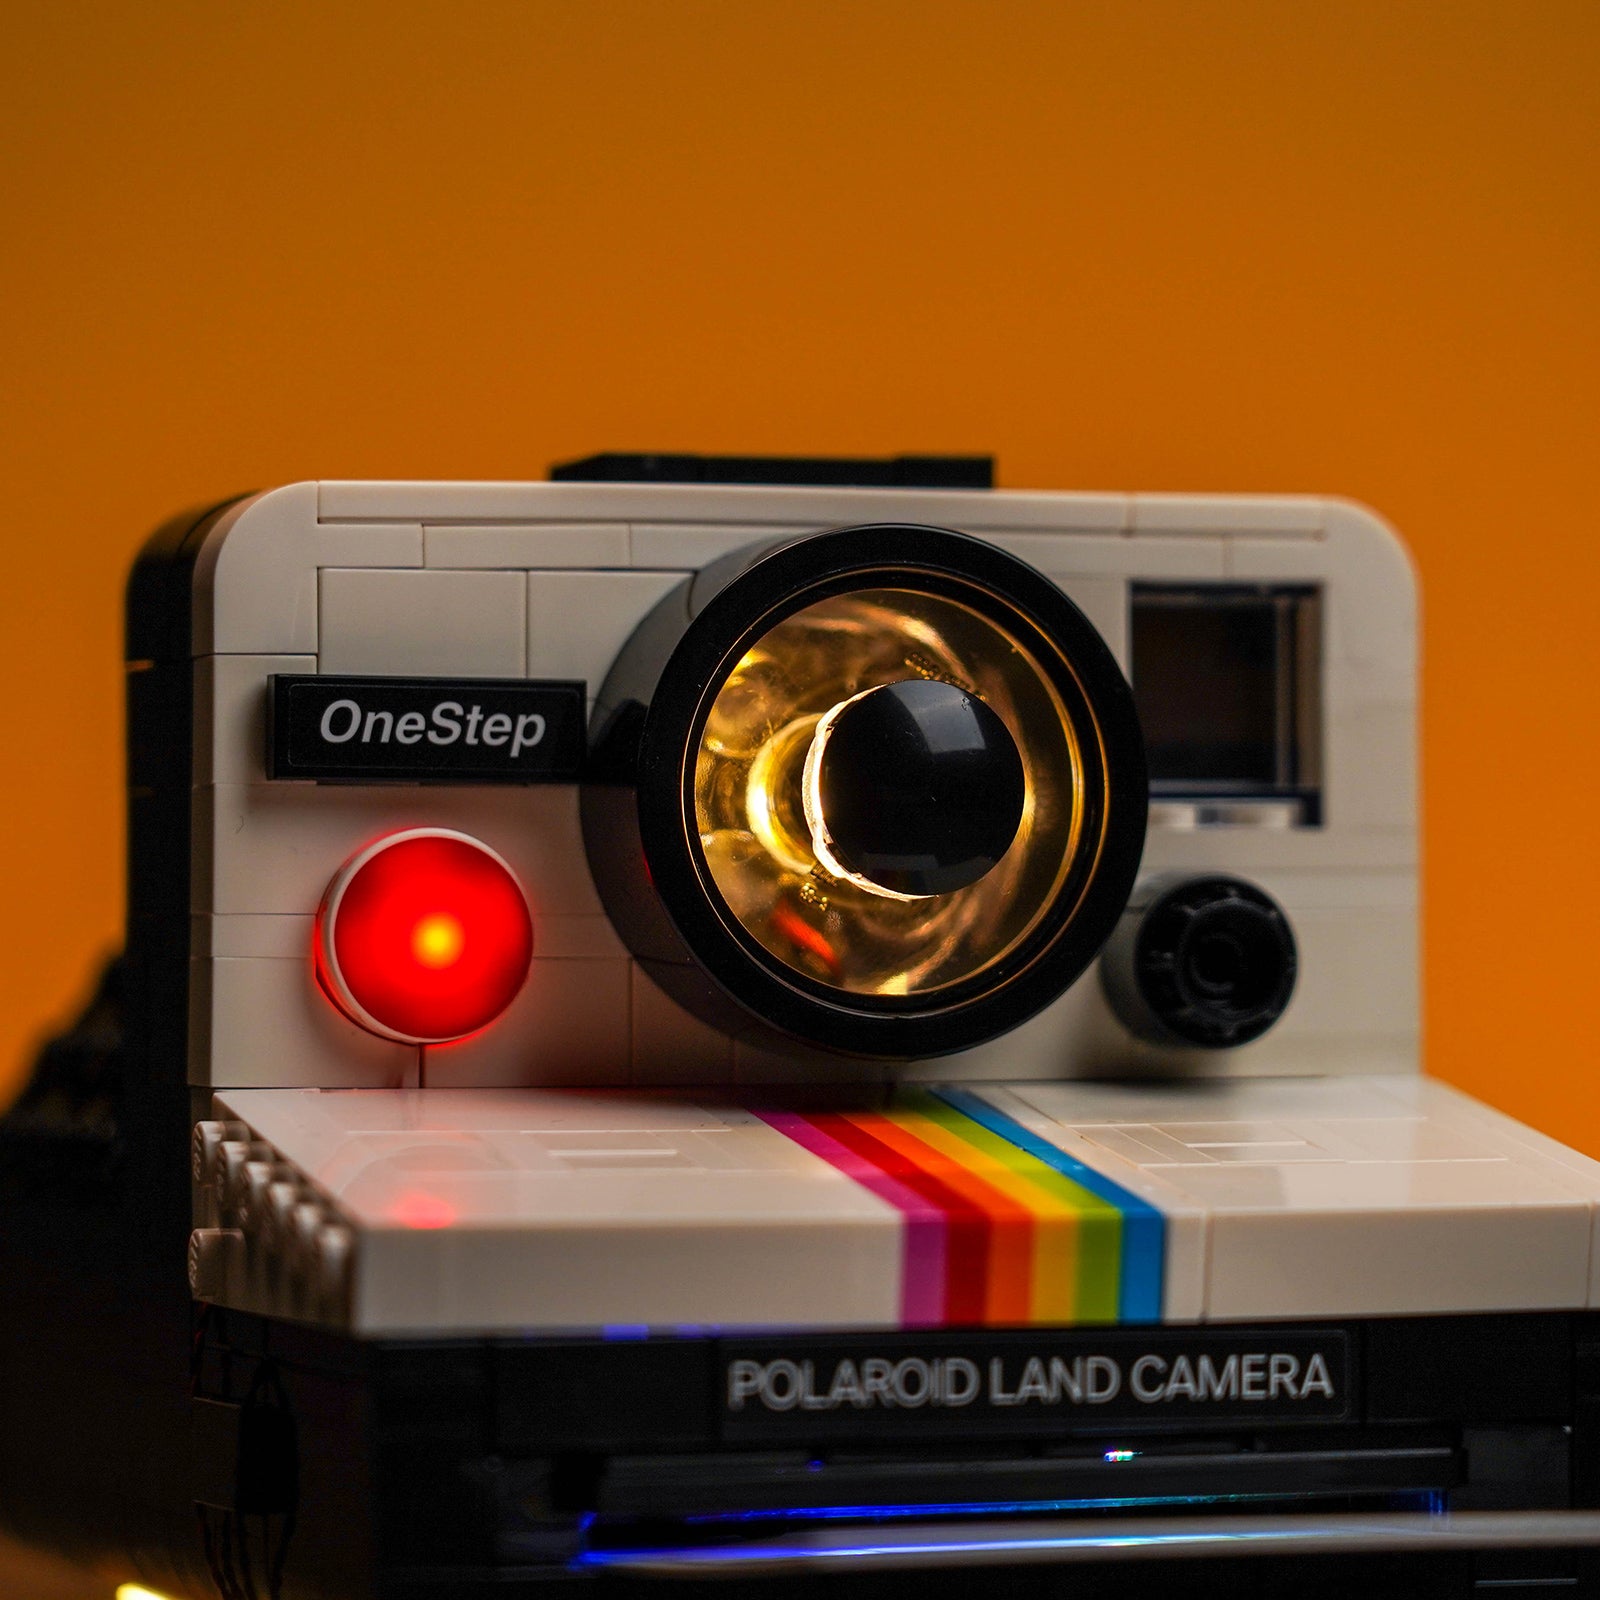 LEGO Polaroid OneStep SX-70 Camera 21345 Light Kit